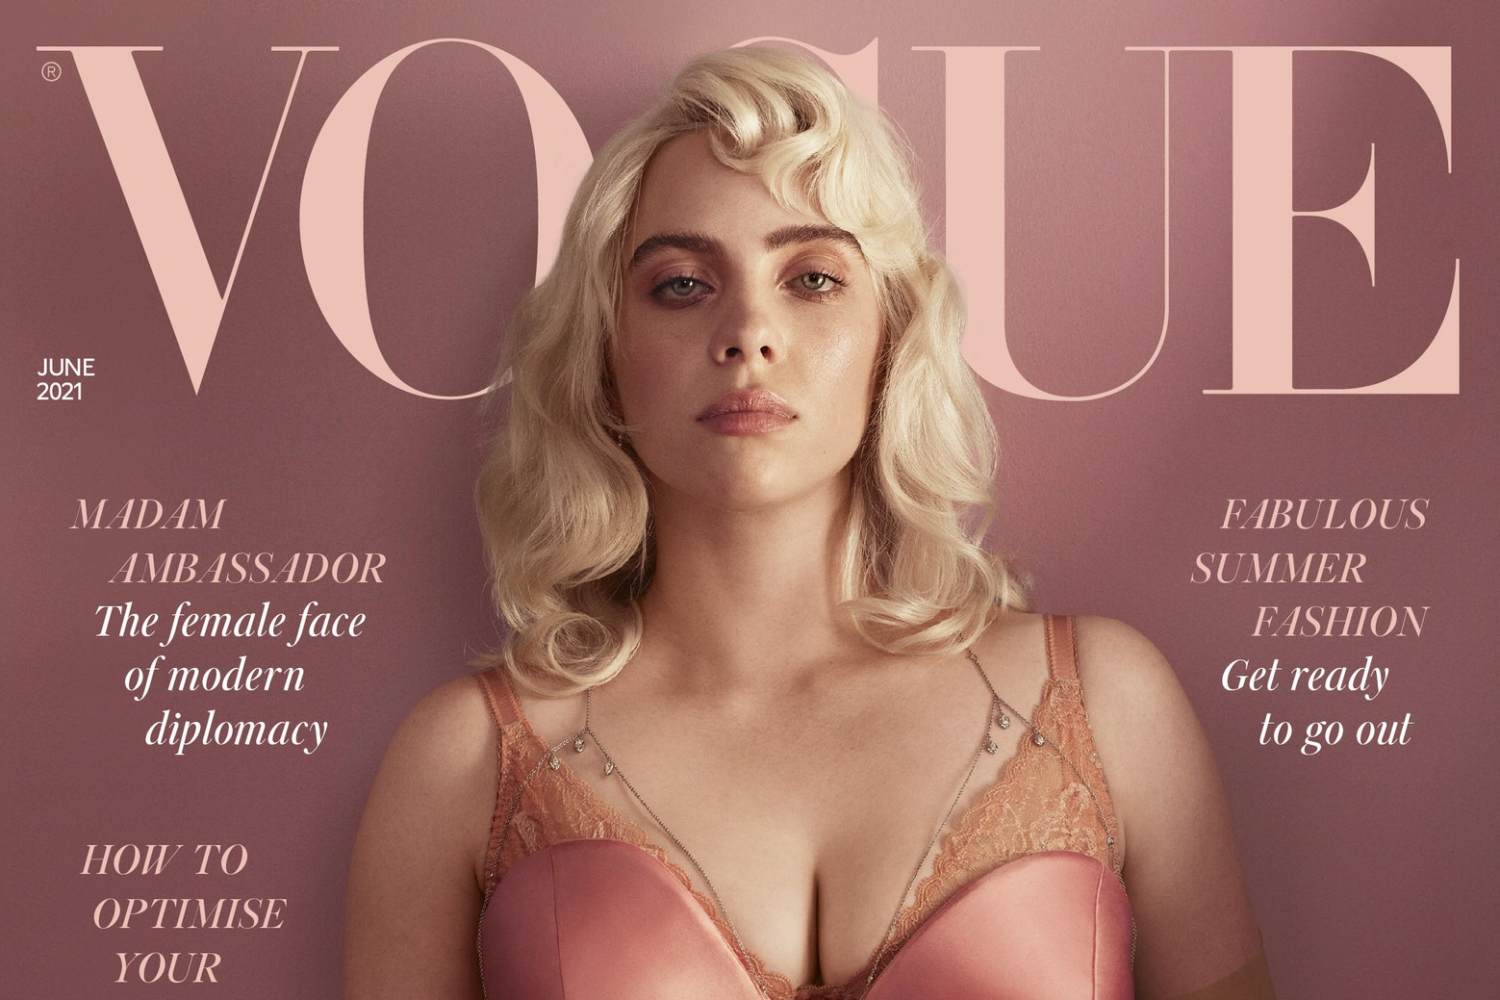 Billie Eilish on the cover of British Vogue